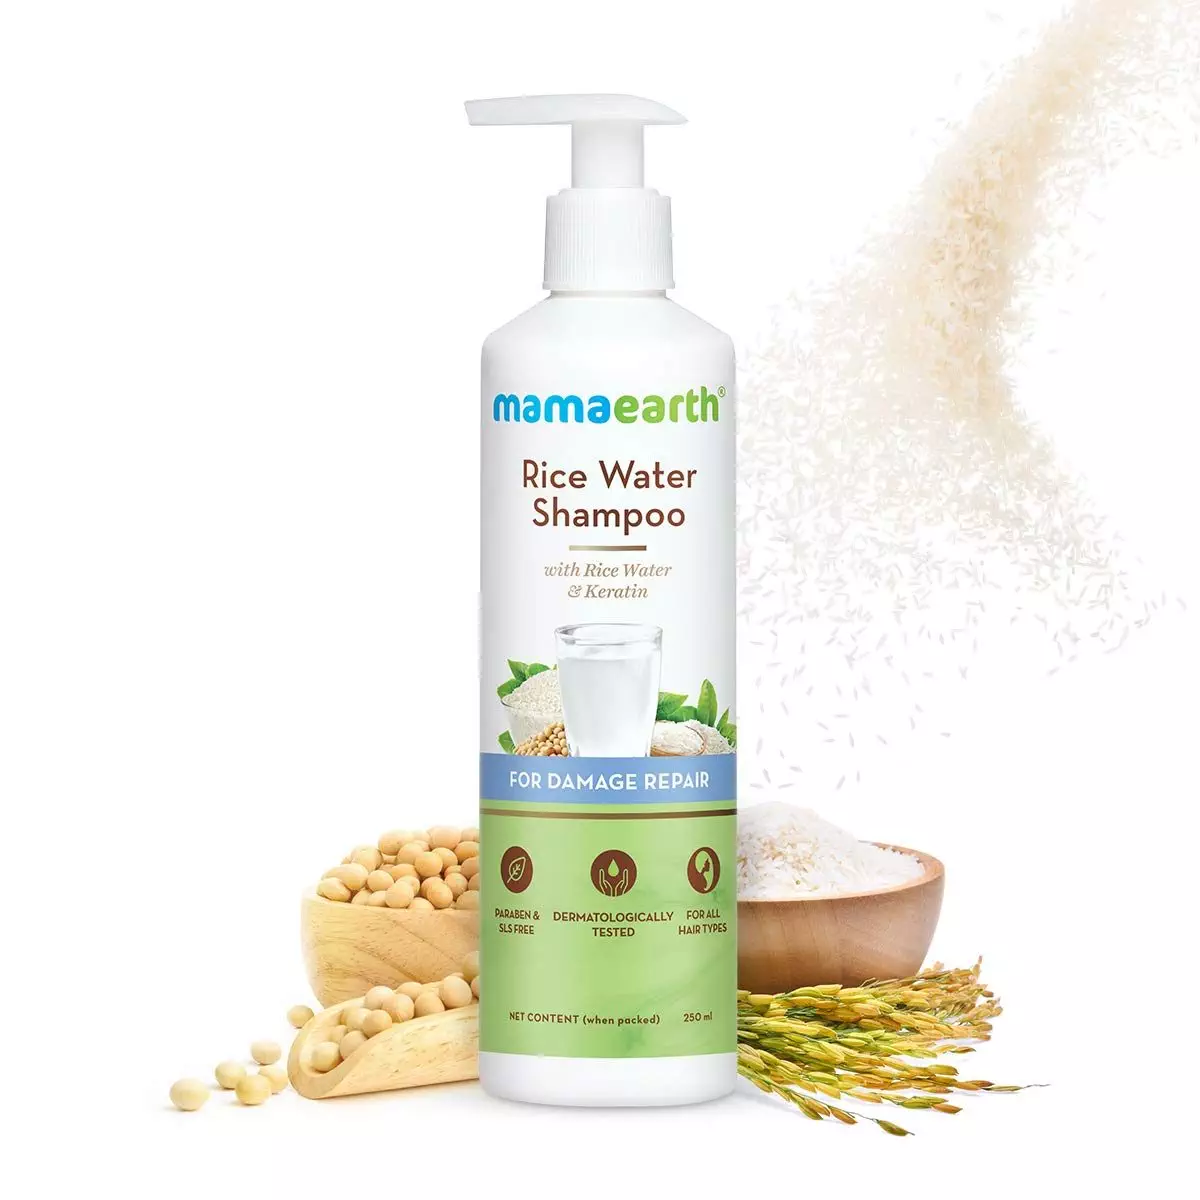 Mamaearth Rice Water Shampoo Review 18